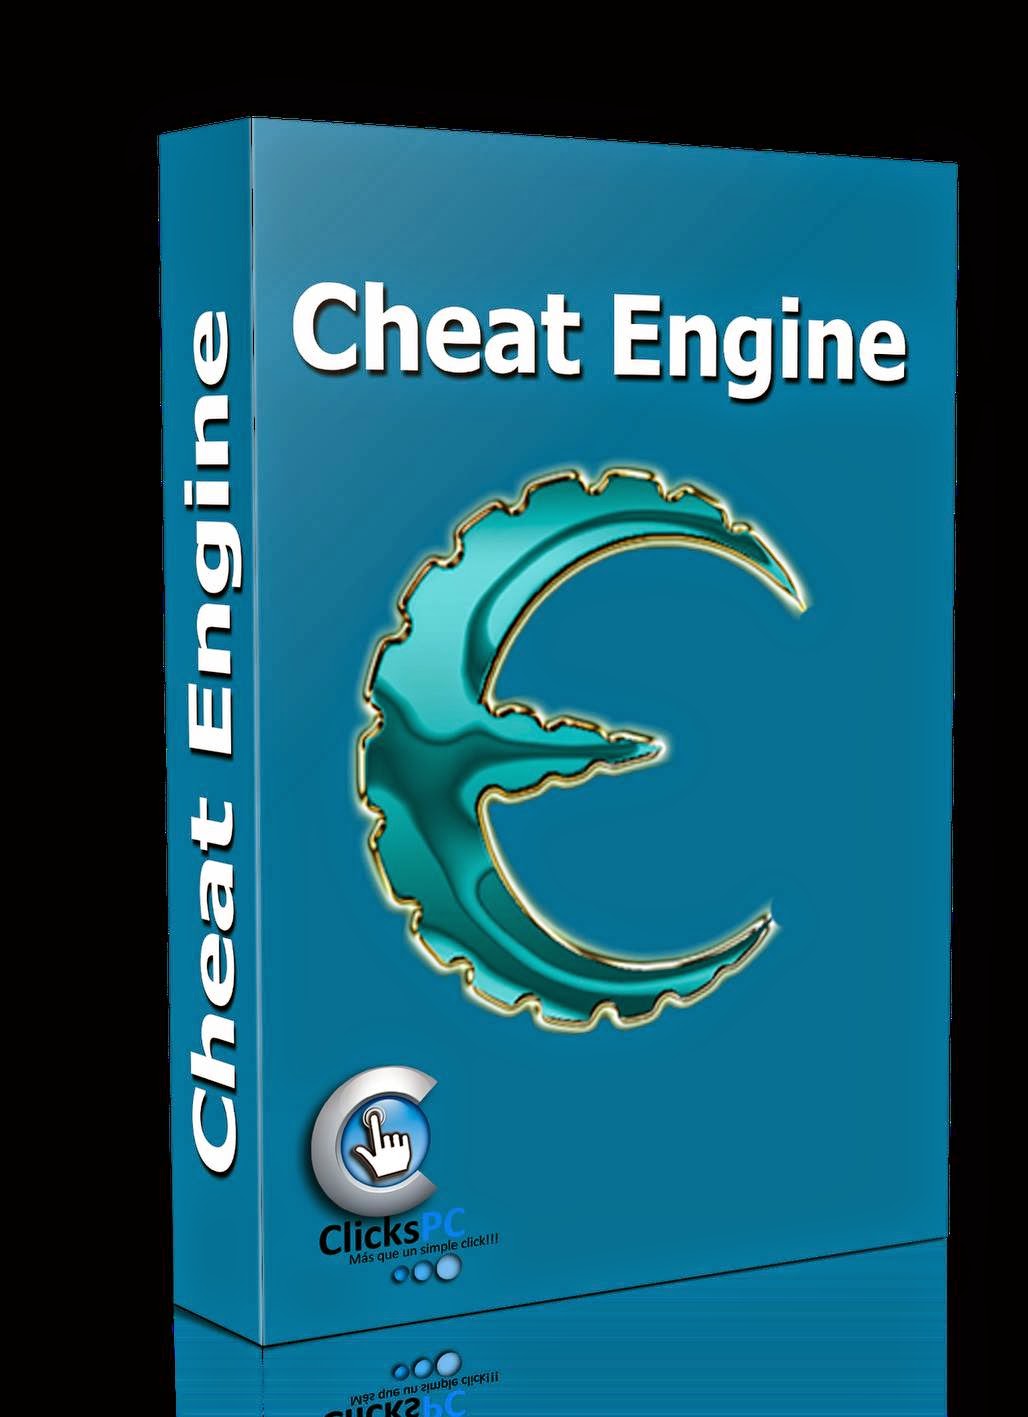 cheat engine hack online game